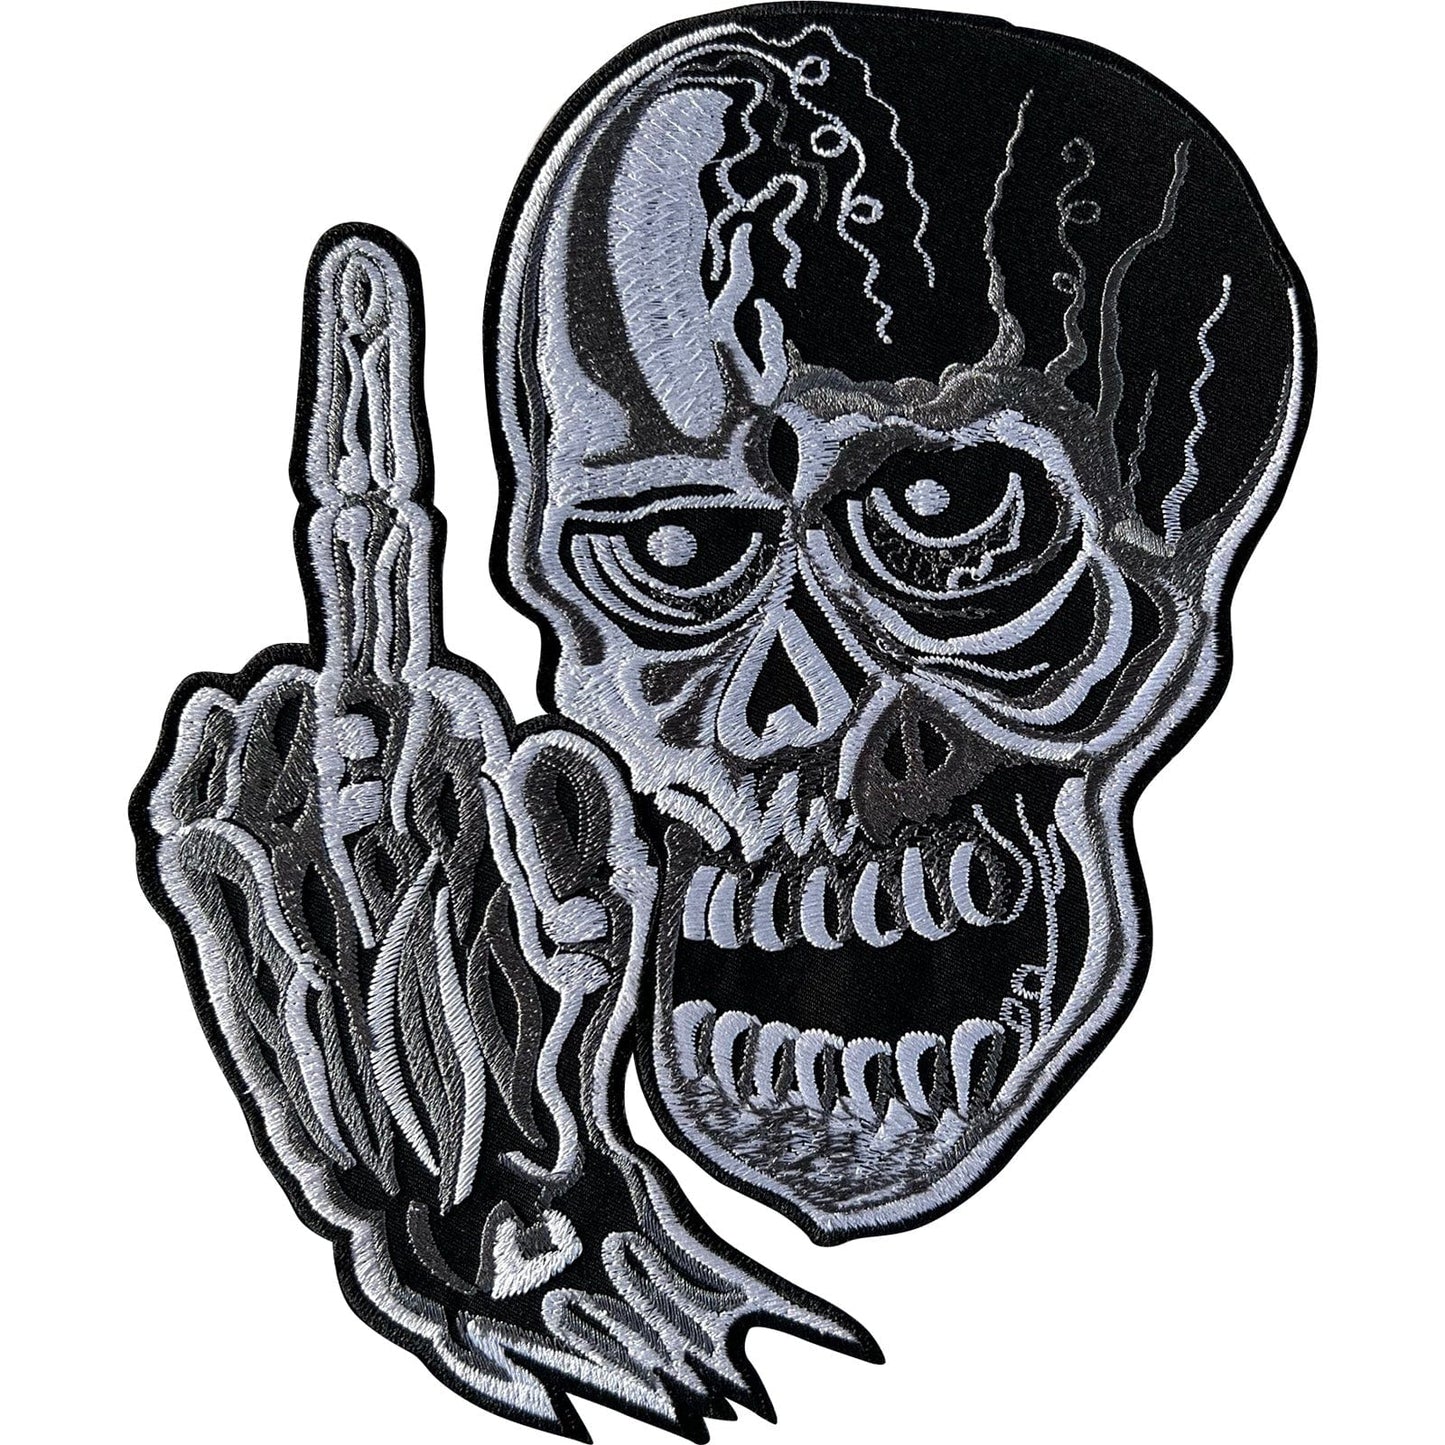 Big Large Skull Middle Finger Patch Iron Sew On Jacket Biker Embroidered Badge